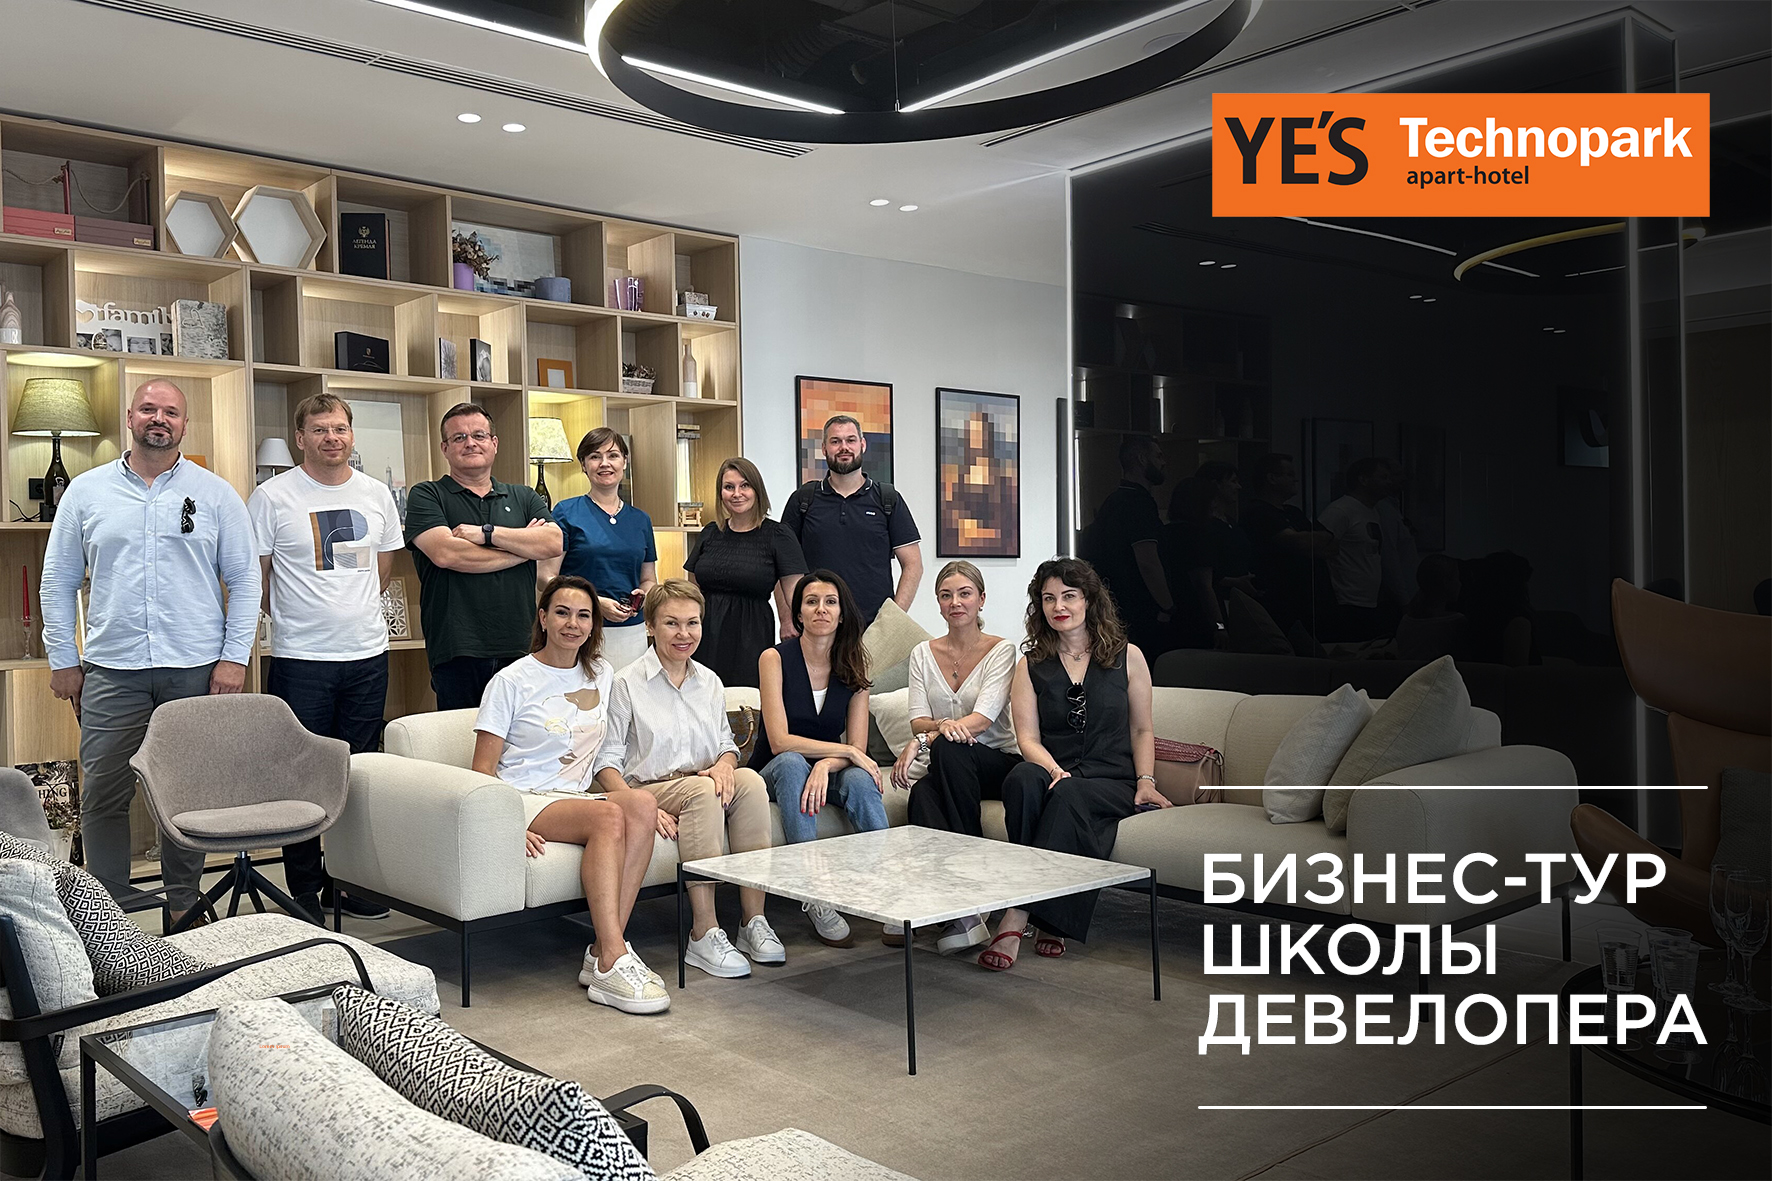 В YE’S Technopark прошел бизнес-тур Школы девелопера